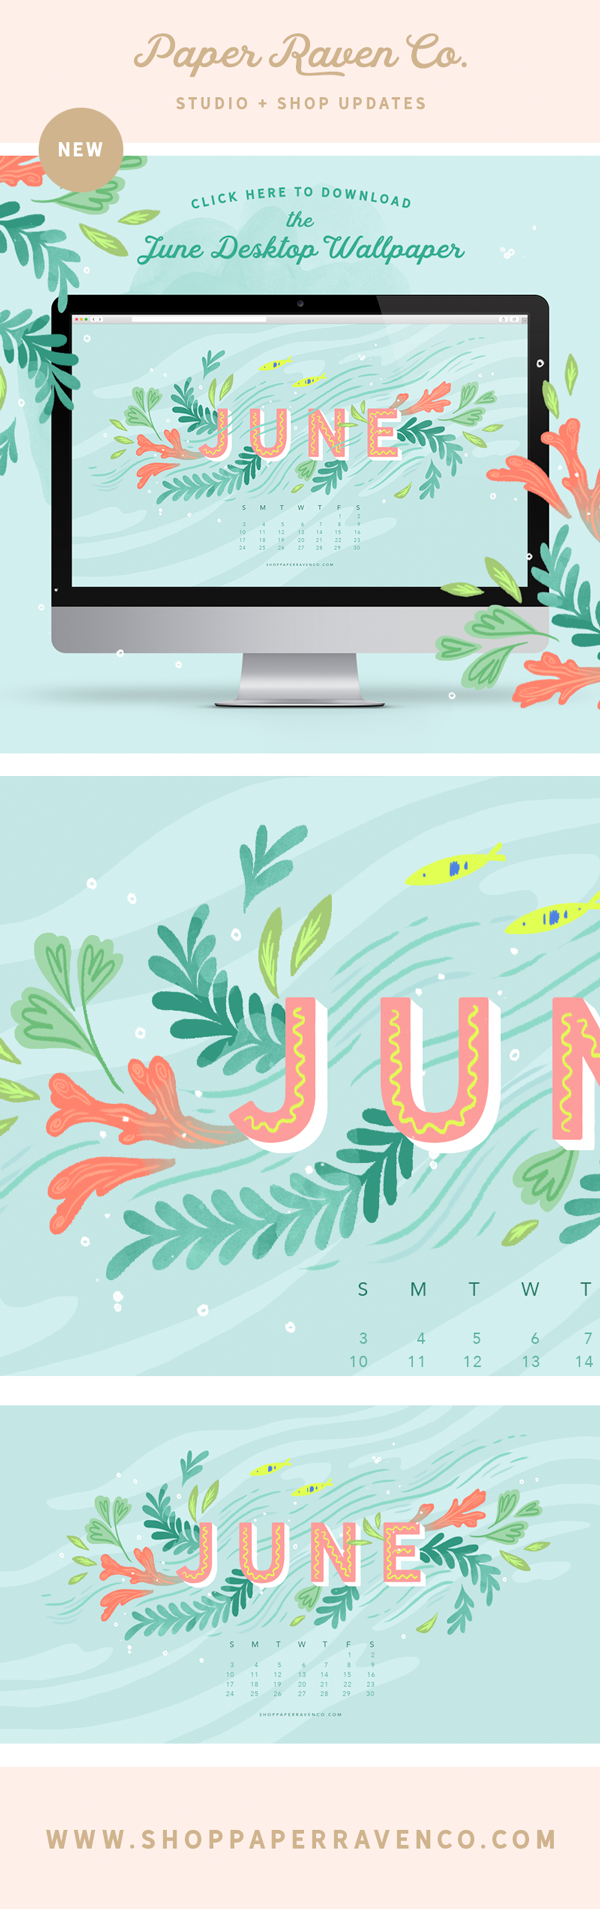 June 2018 Illustrated Desktop Wallpaper - Get it at www.ShopPaperRavenCo.com